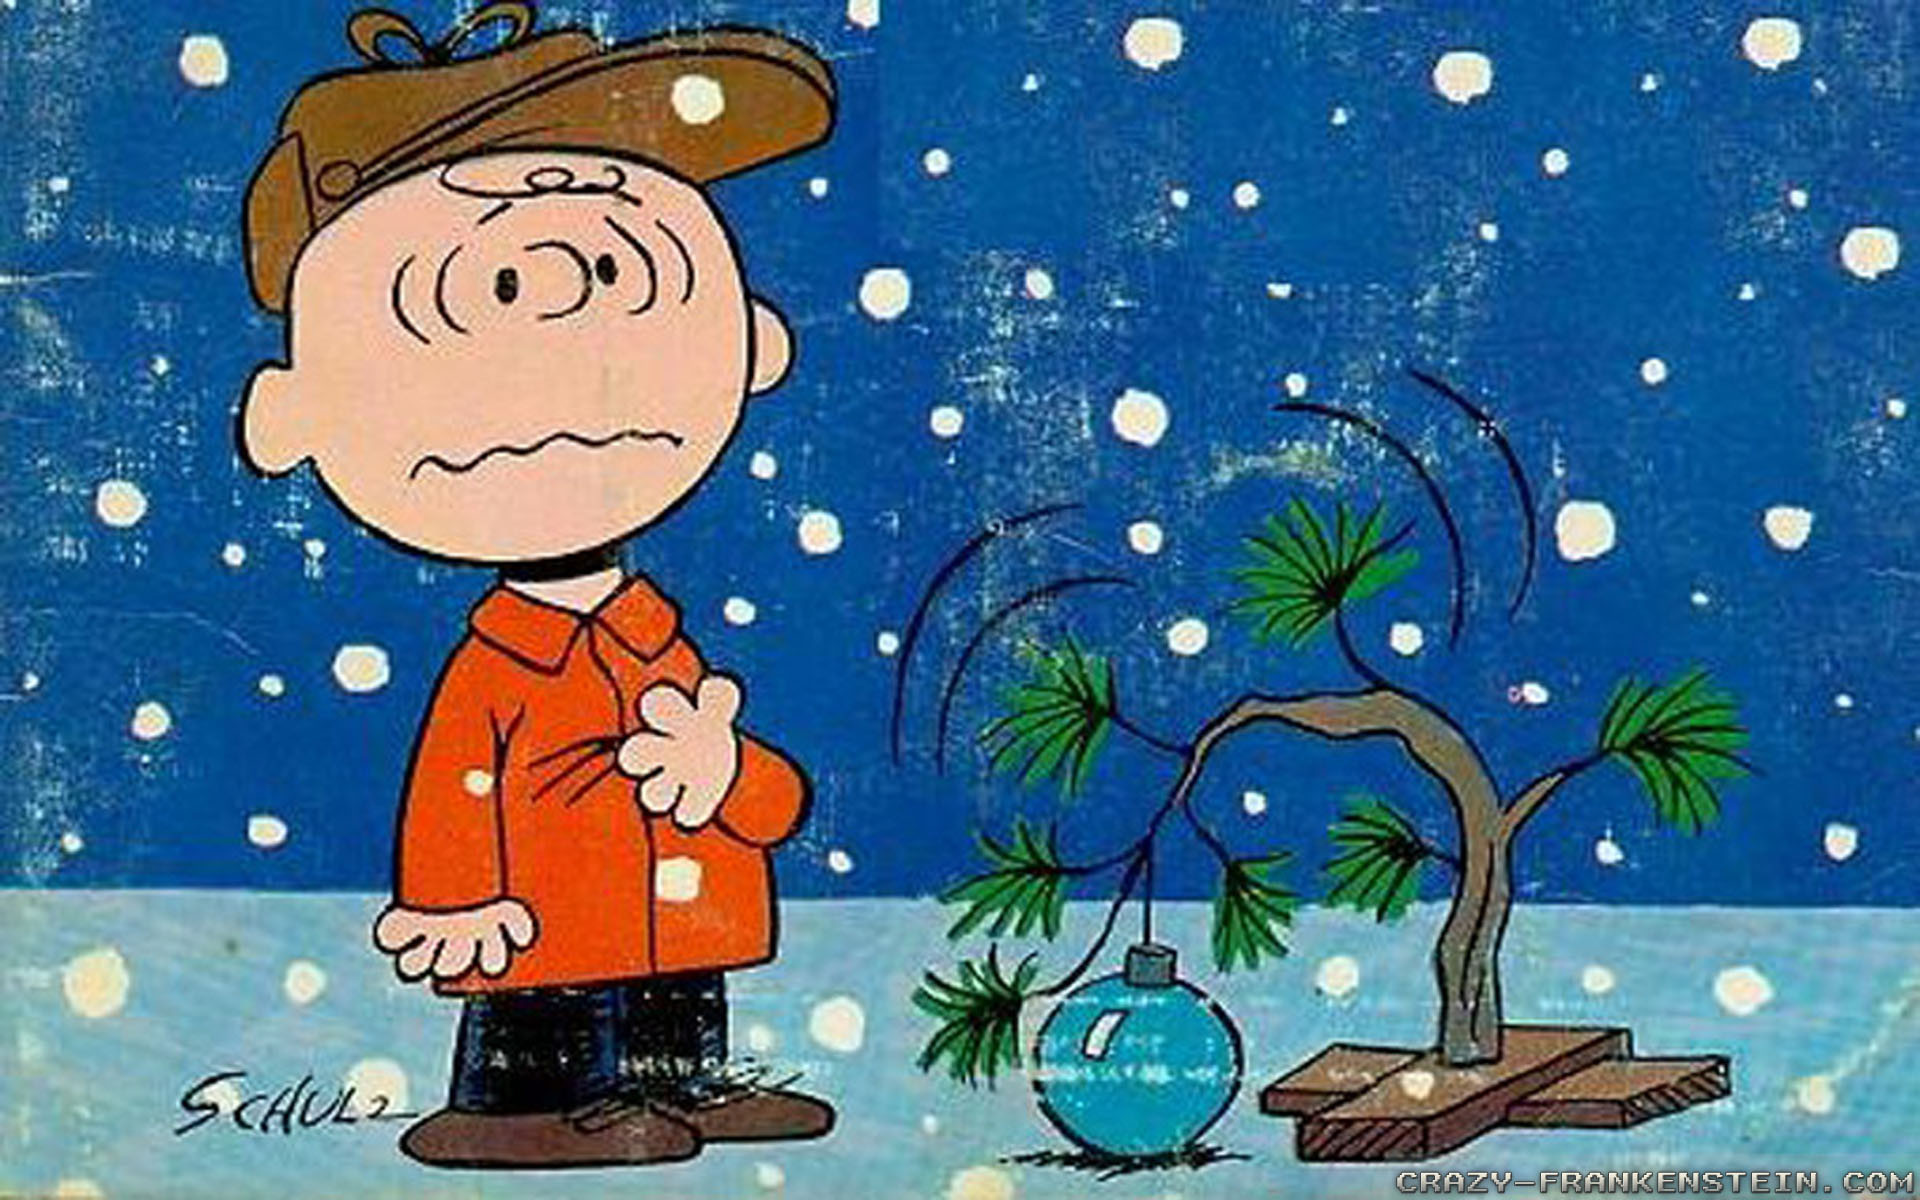 Wallpaper: Charlie Brown Christmas tree cartoon. Resolution: 1024×768 |  1280×1024 | 1600×1200. Widescreen Res: 1440×900 | 1680×1050 | 1920×1200